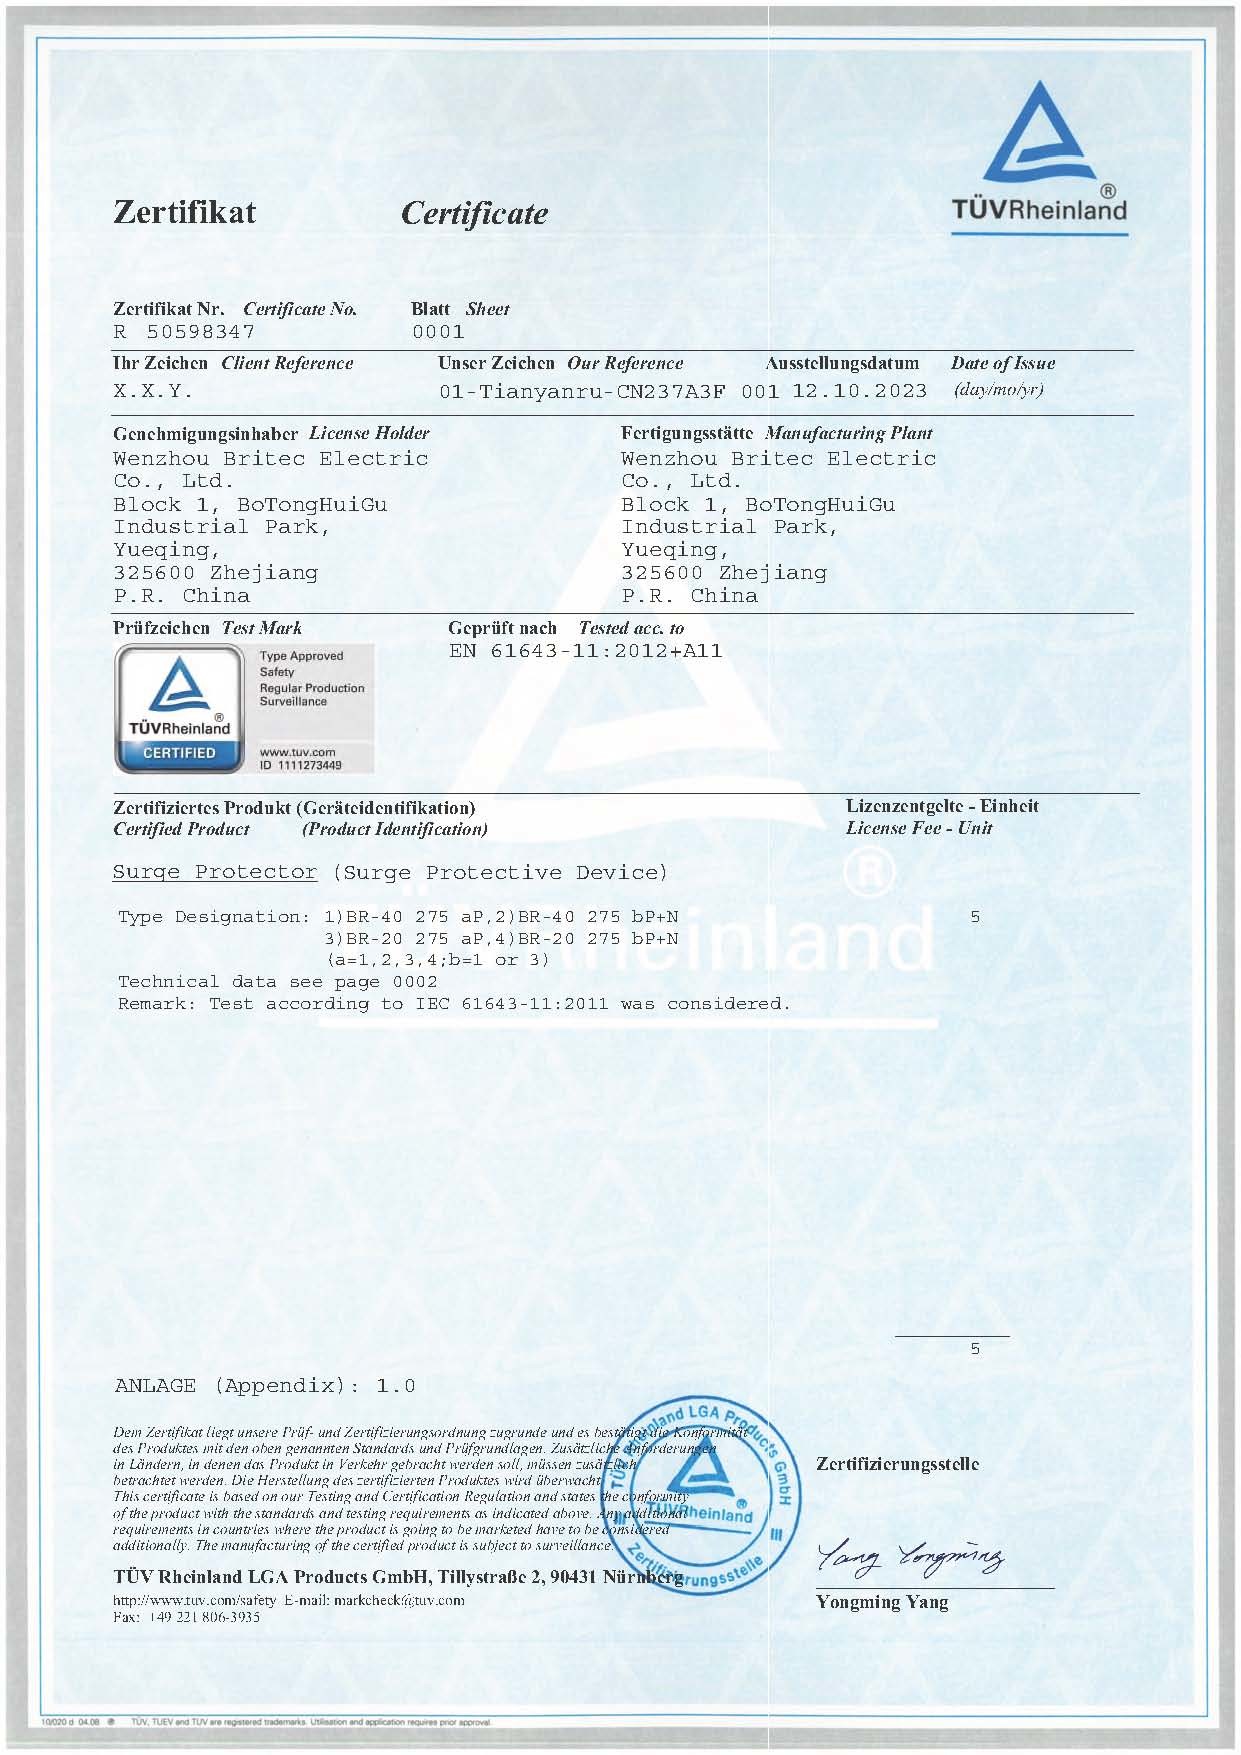 Chine Britec Electric Co., Ltd. Certifications